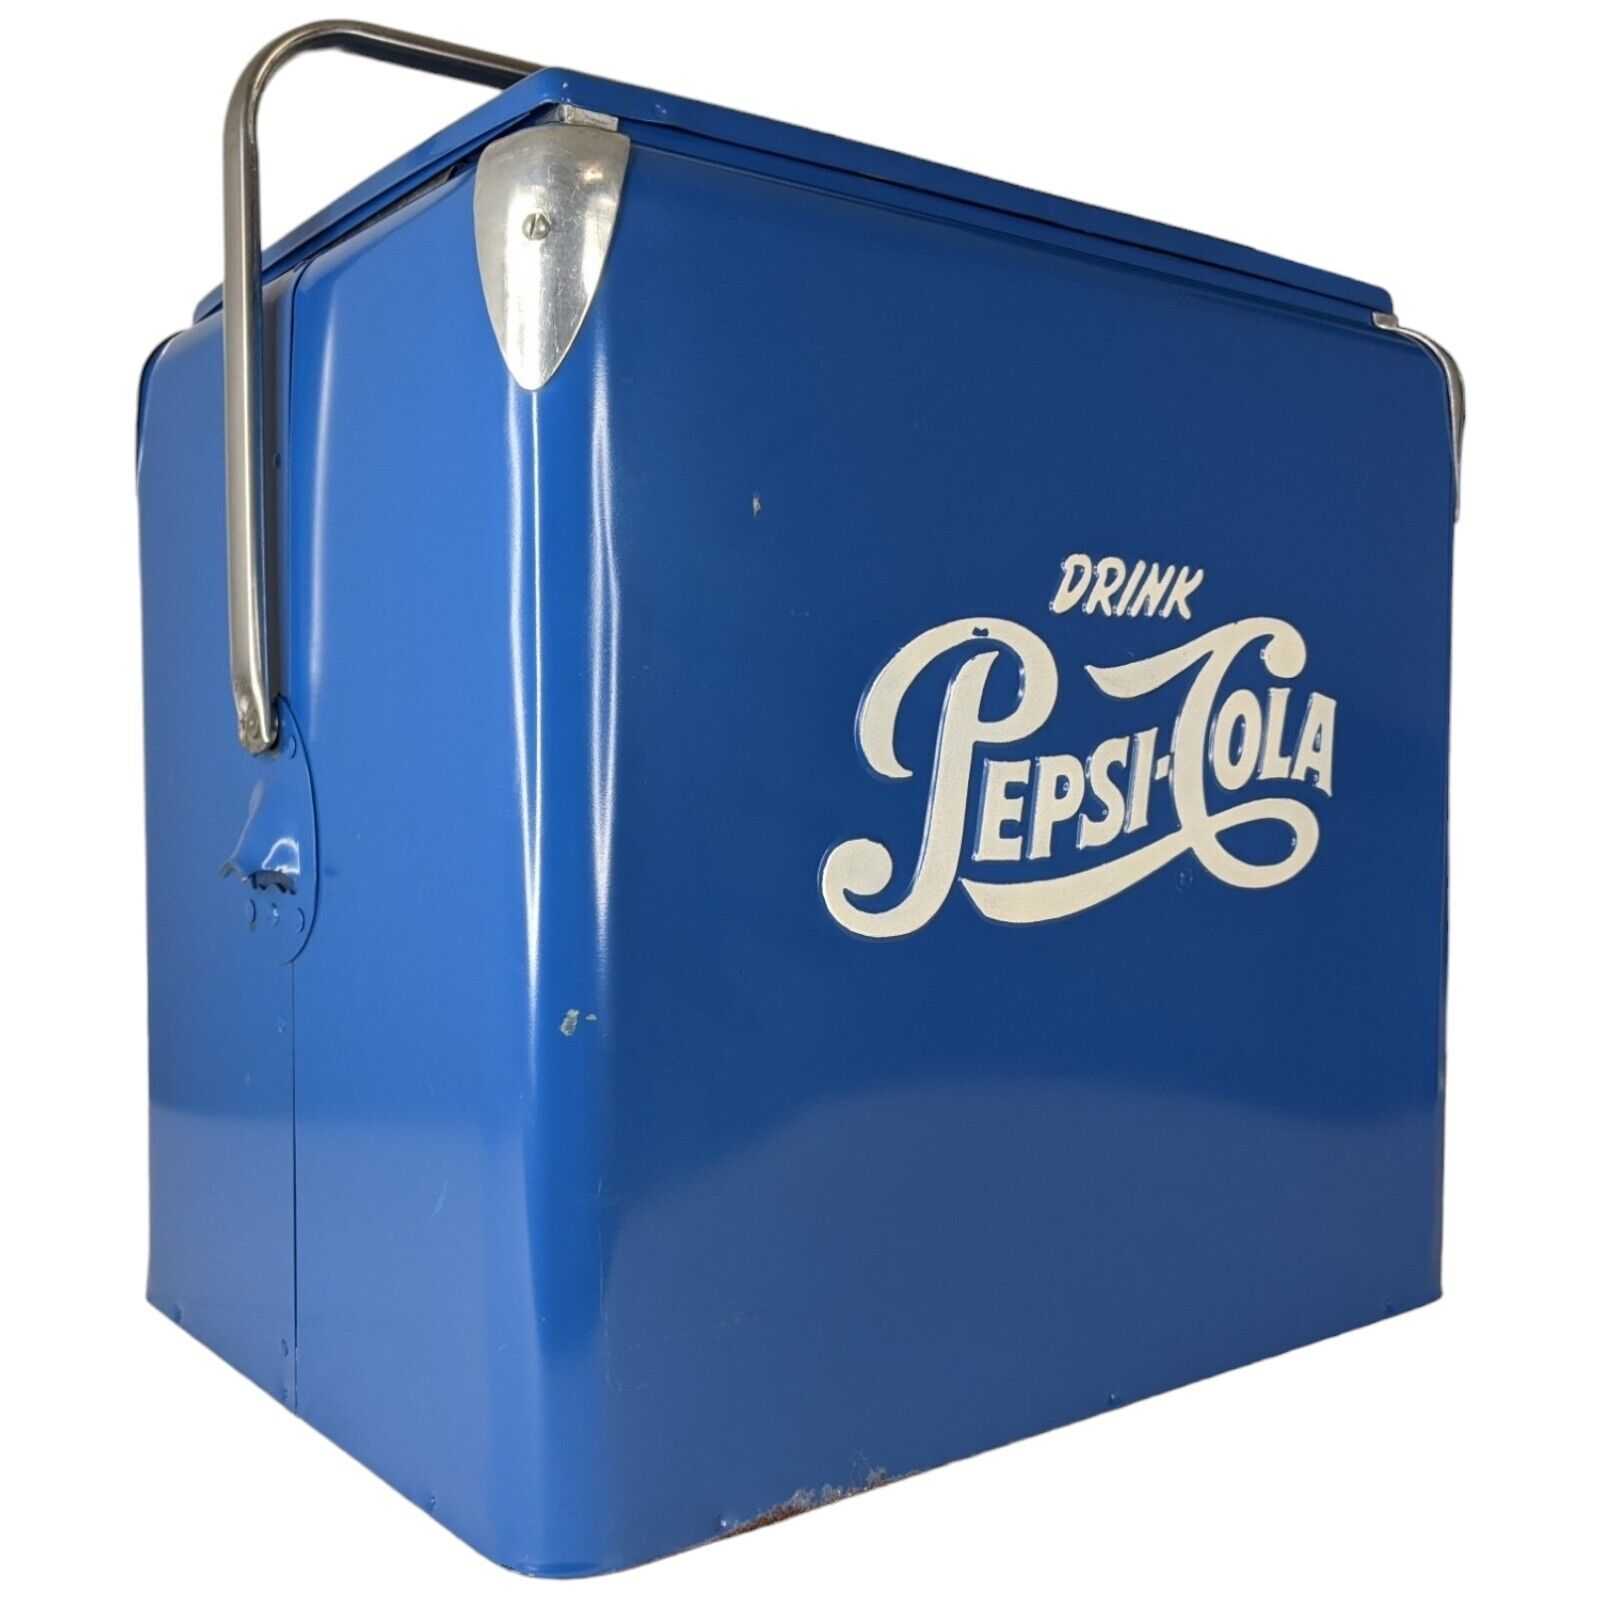 Vintage 1950’s Drink Pepsi-Cola Blue Metal Cooler Ice Box w/ Tray & Original Box